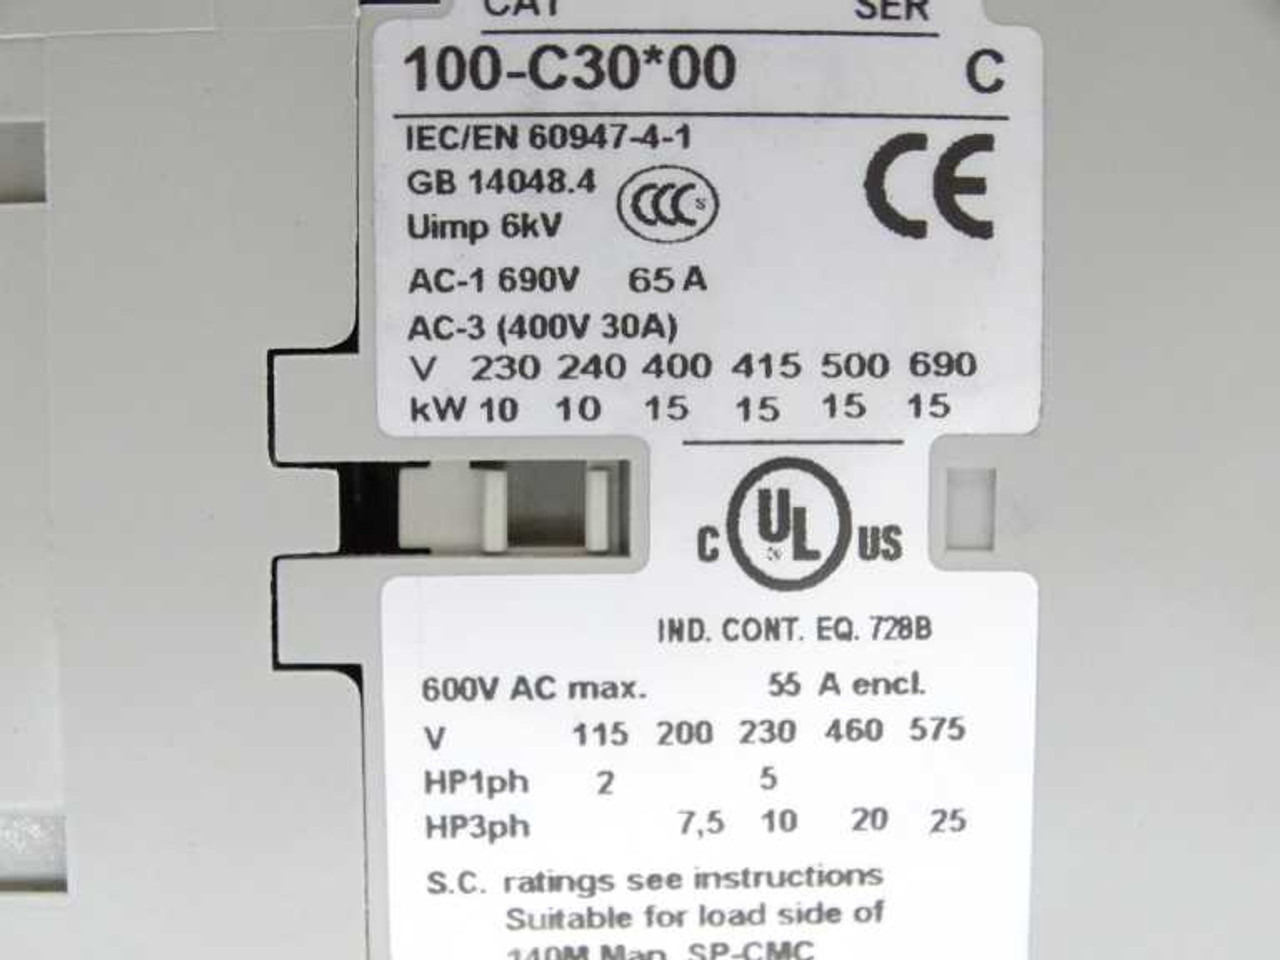 Allen-Bradley 100-C30D10 IEC 30 A Contactor